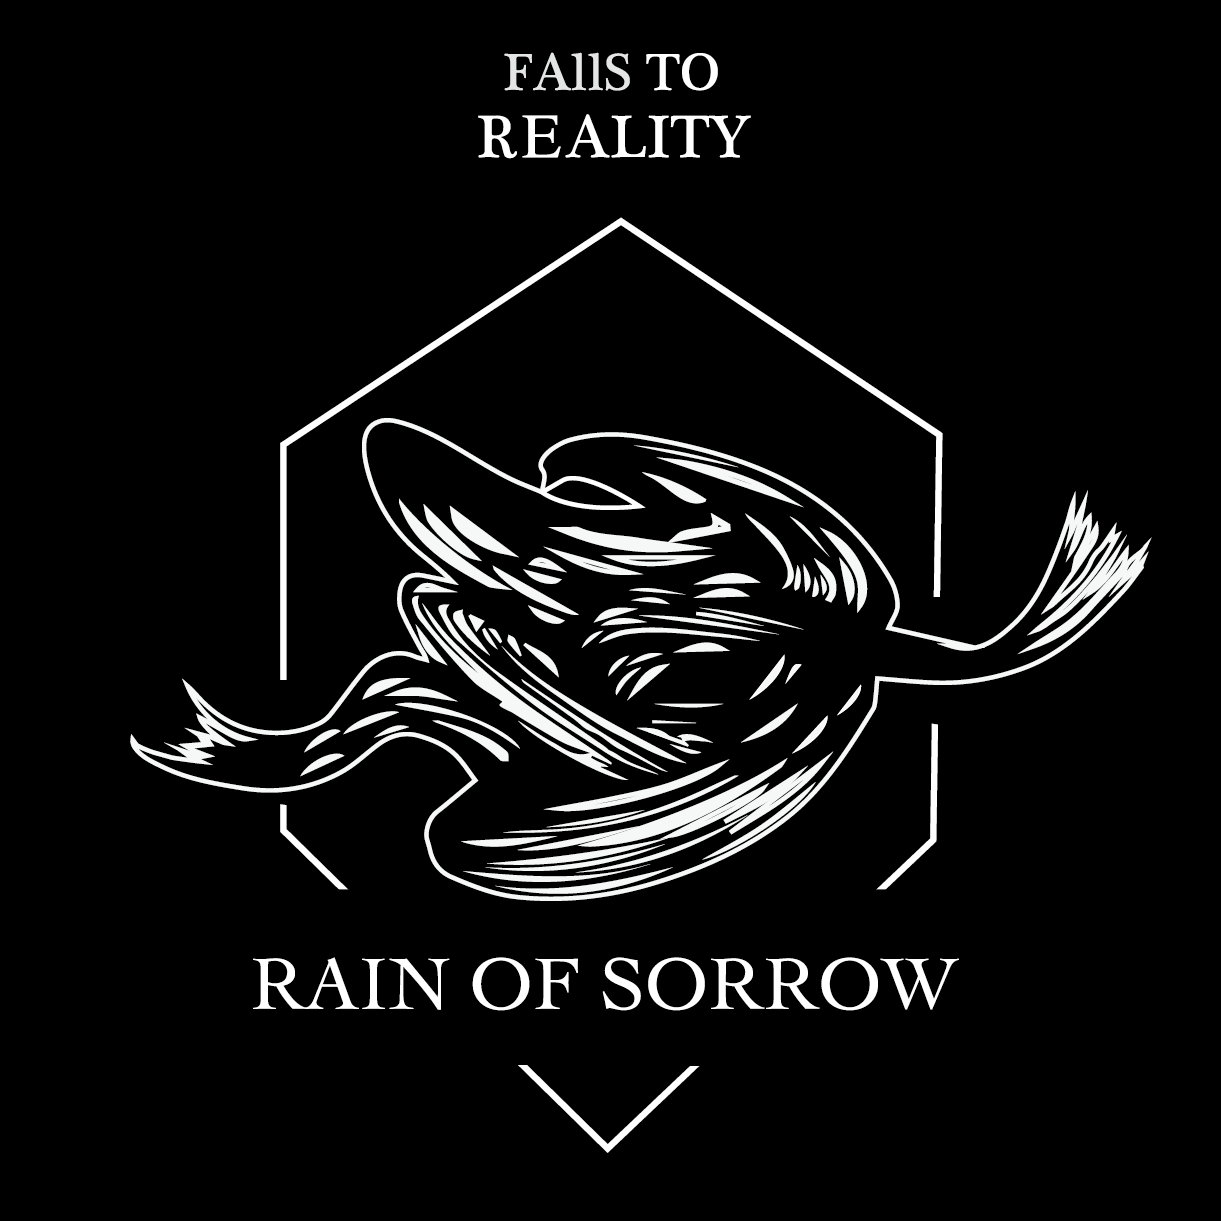 煙雨飄渺  Rain of Sorrow